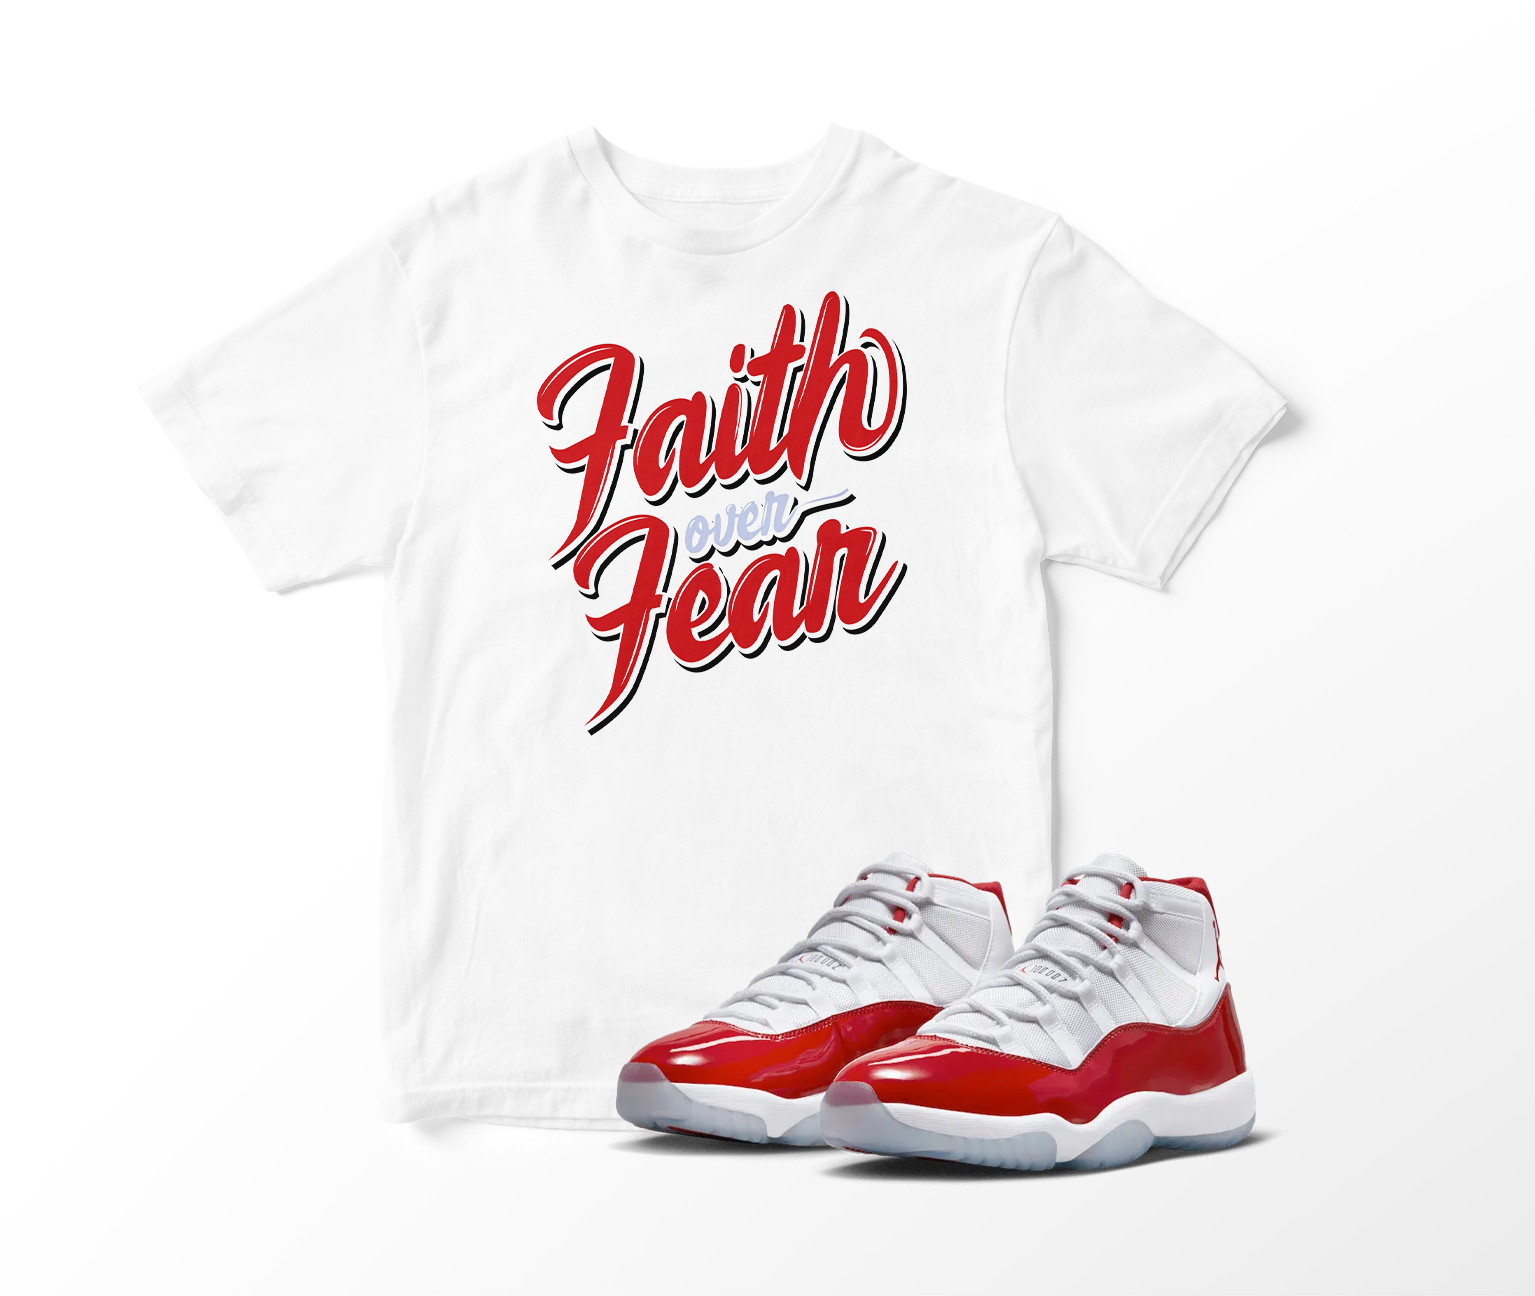 'Faith Over Fear' Custom Graphic Short Sleeve T-Shirt To Match Air Jordan 11 Cherry Red